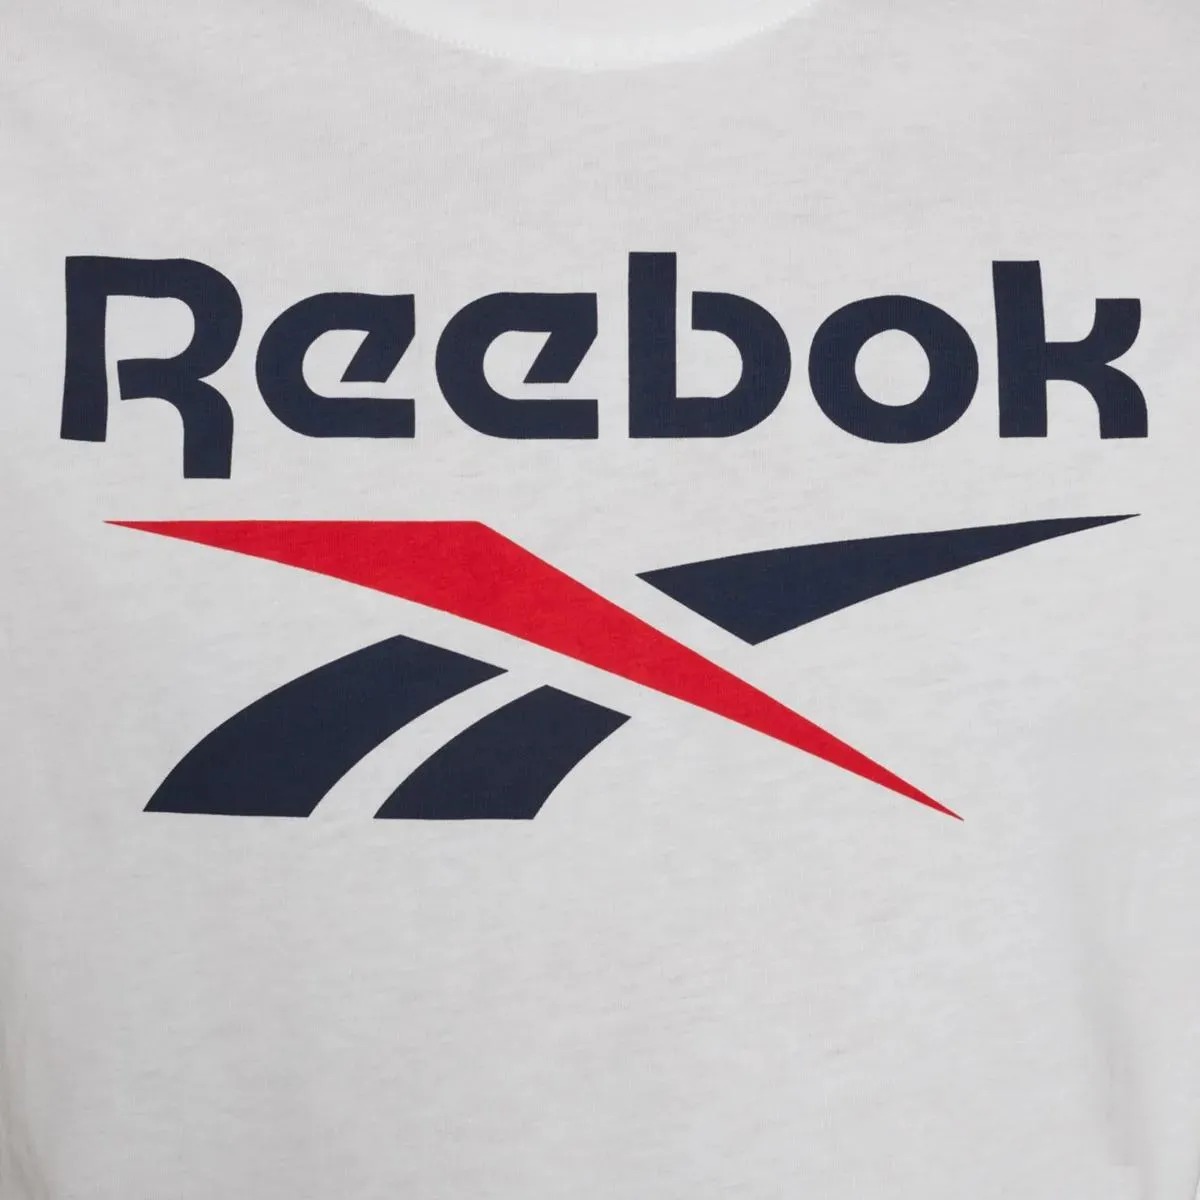 Reebok T-shirt RI Big Logo Tee 